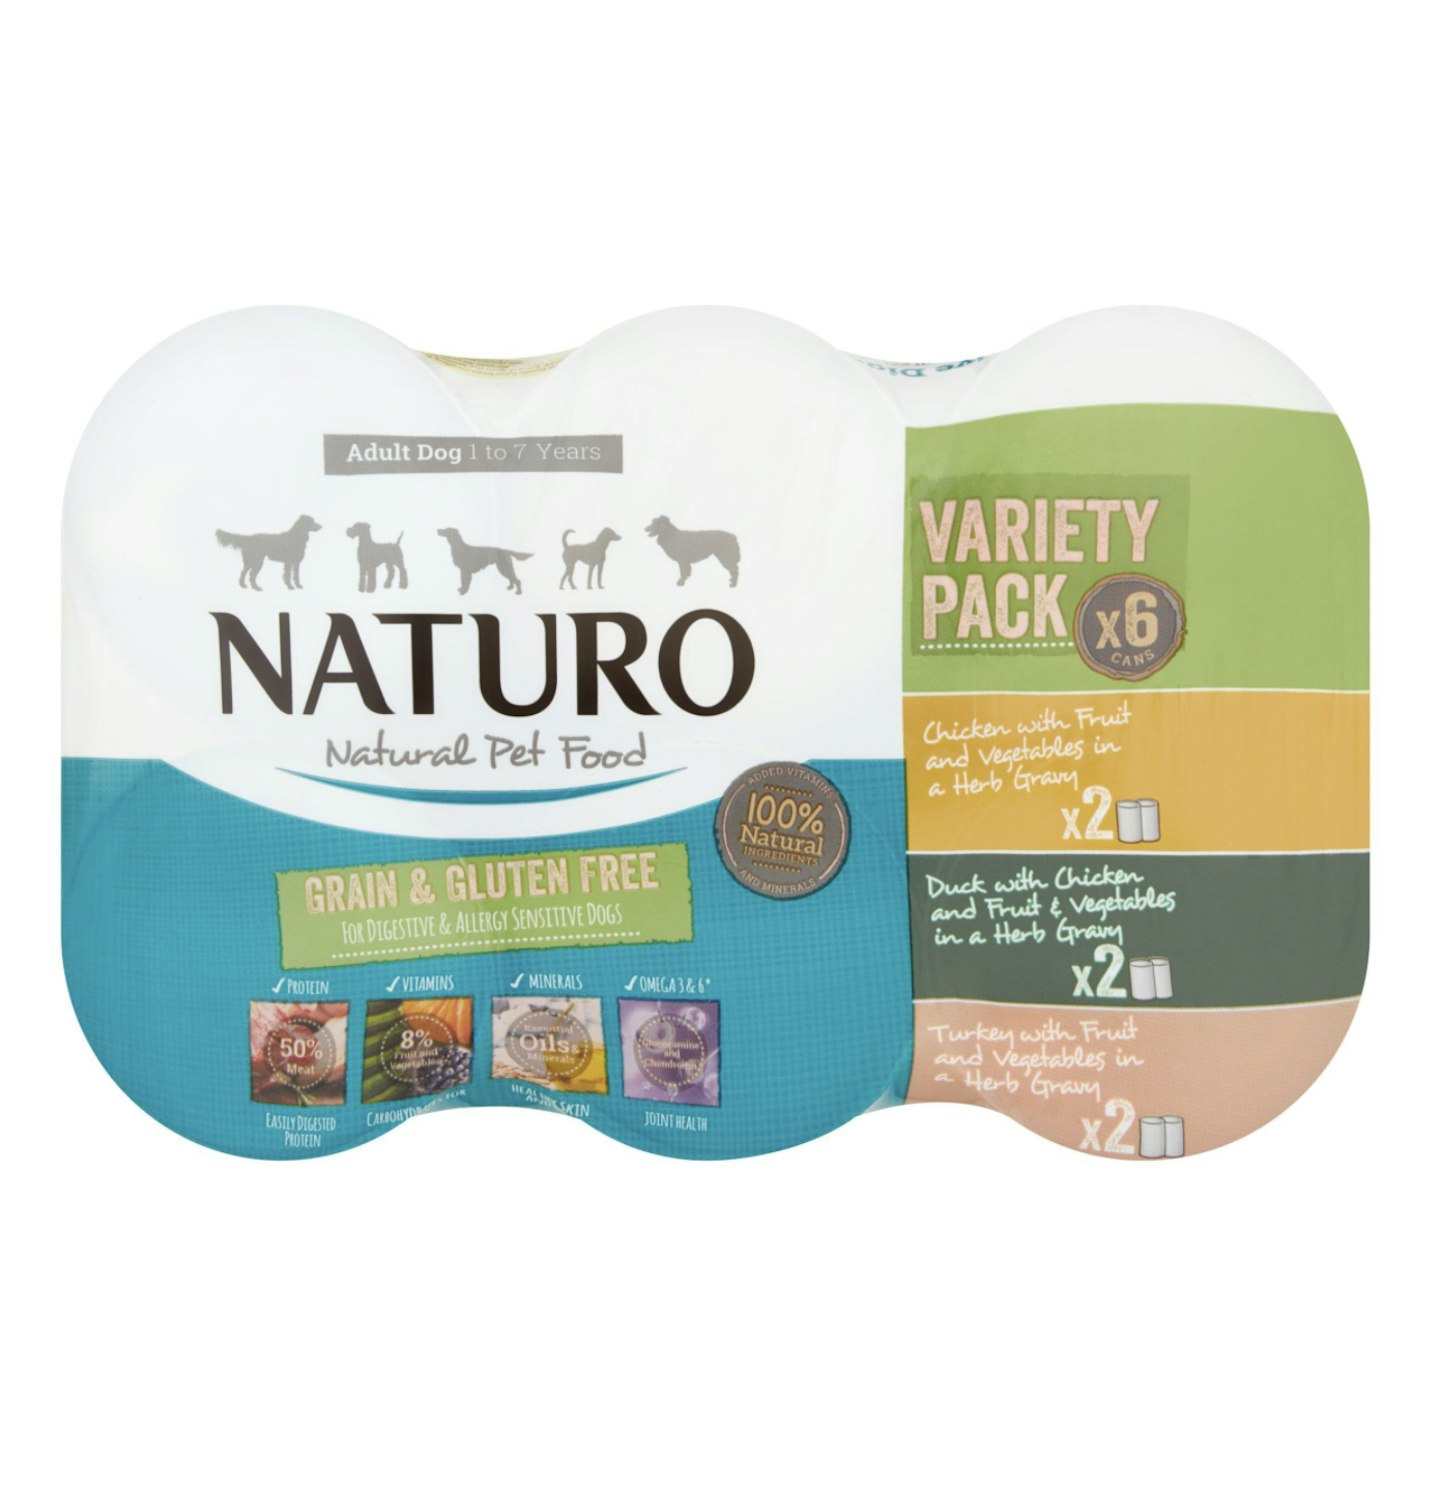 Naturo Adult Dog Grain & Gluten Free